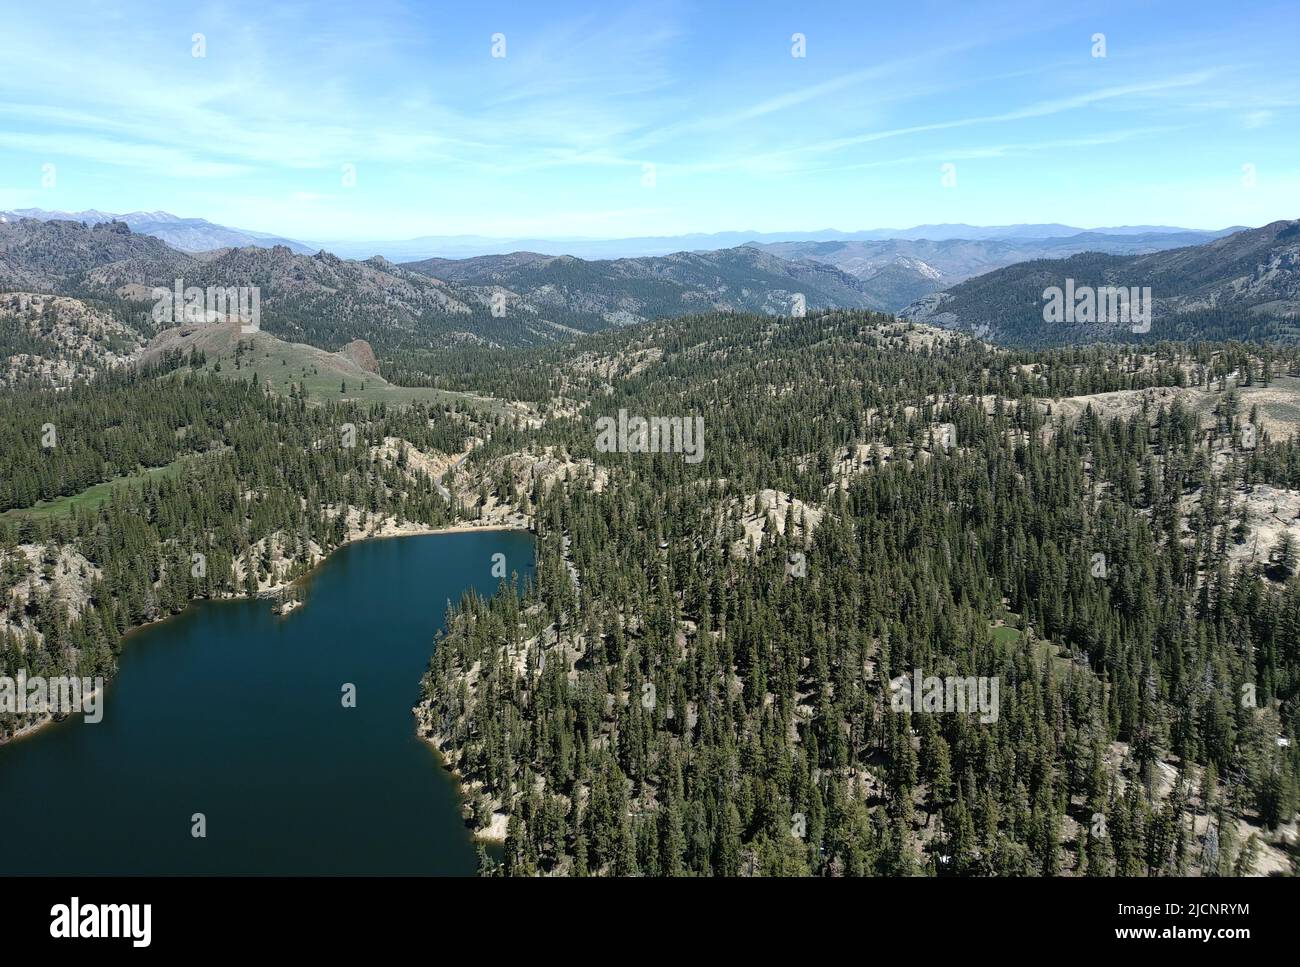 High Sierra Mountains near Markleeville, California. Kinney Lake, Lake Alpine and Ebbets peak are shown. Stock Photo